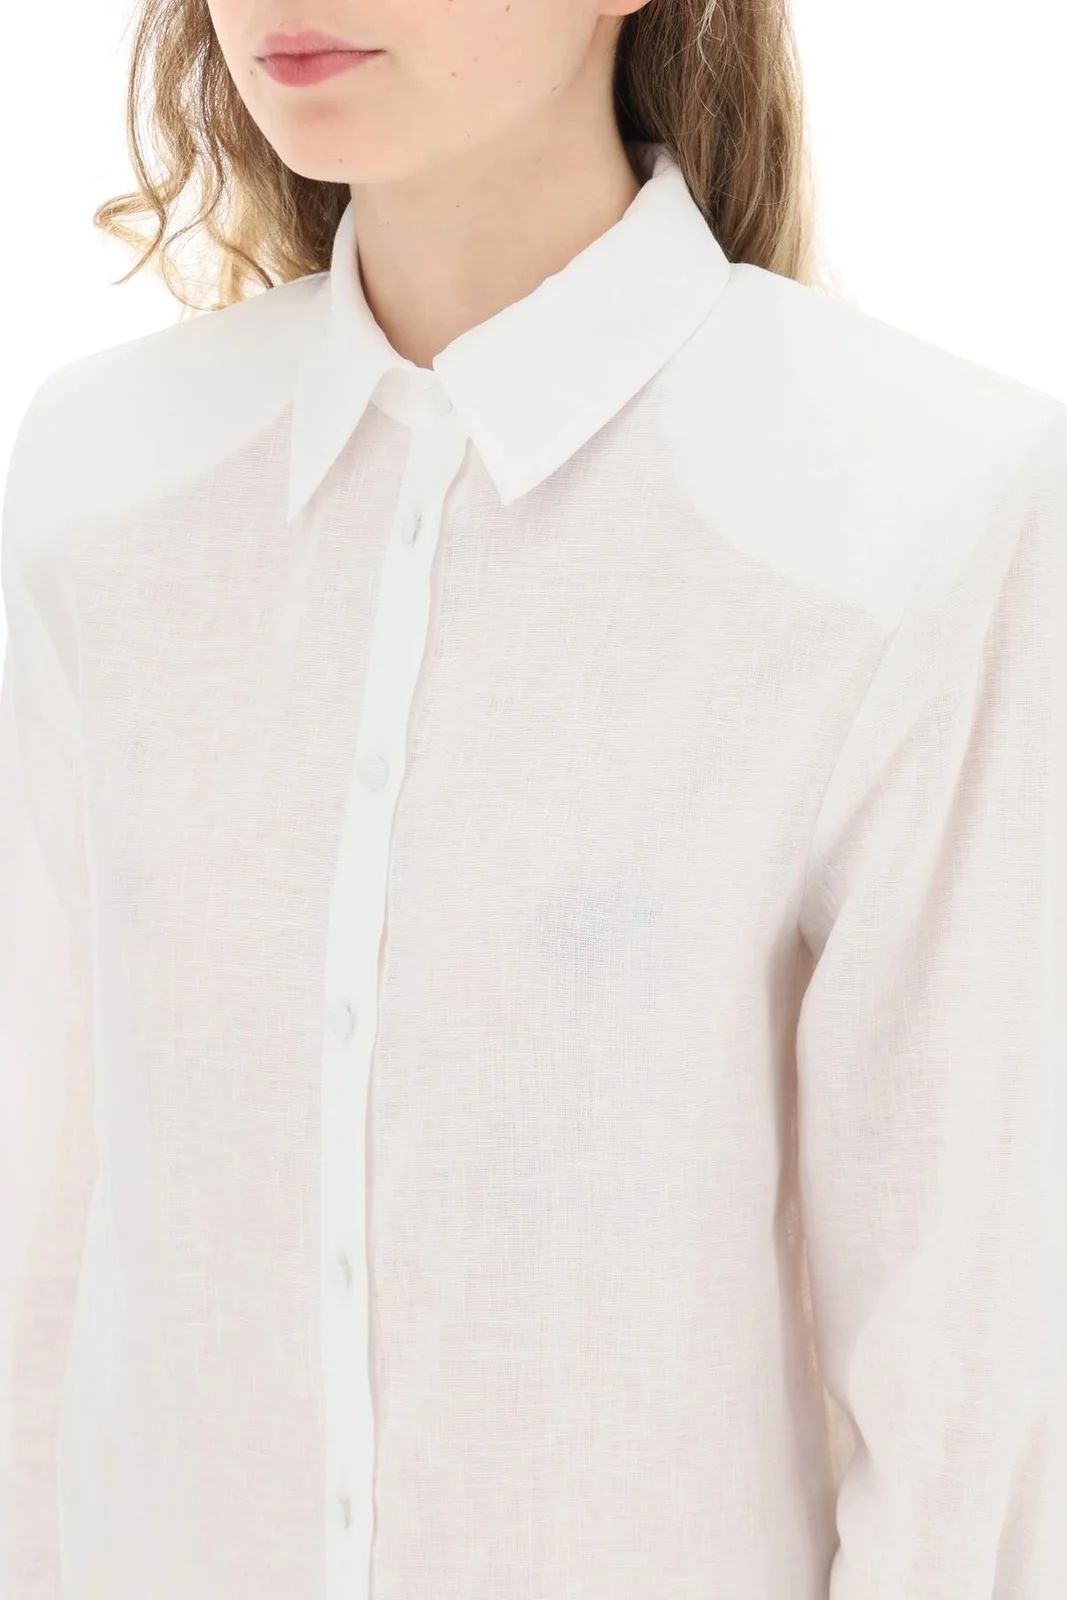 Mvp Wardrobe Buttoned Shirt Dress | Cettire Global